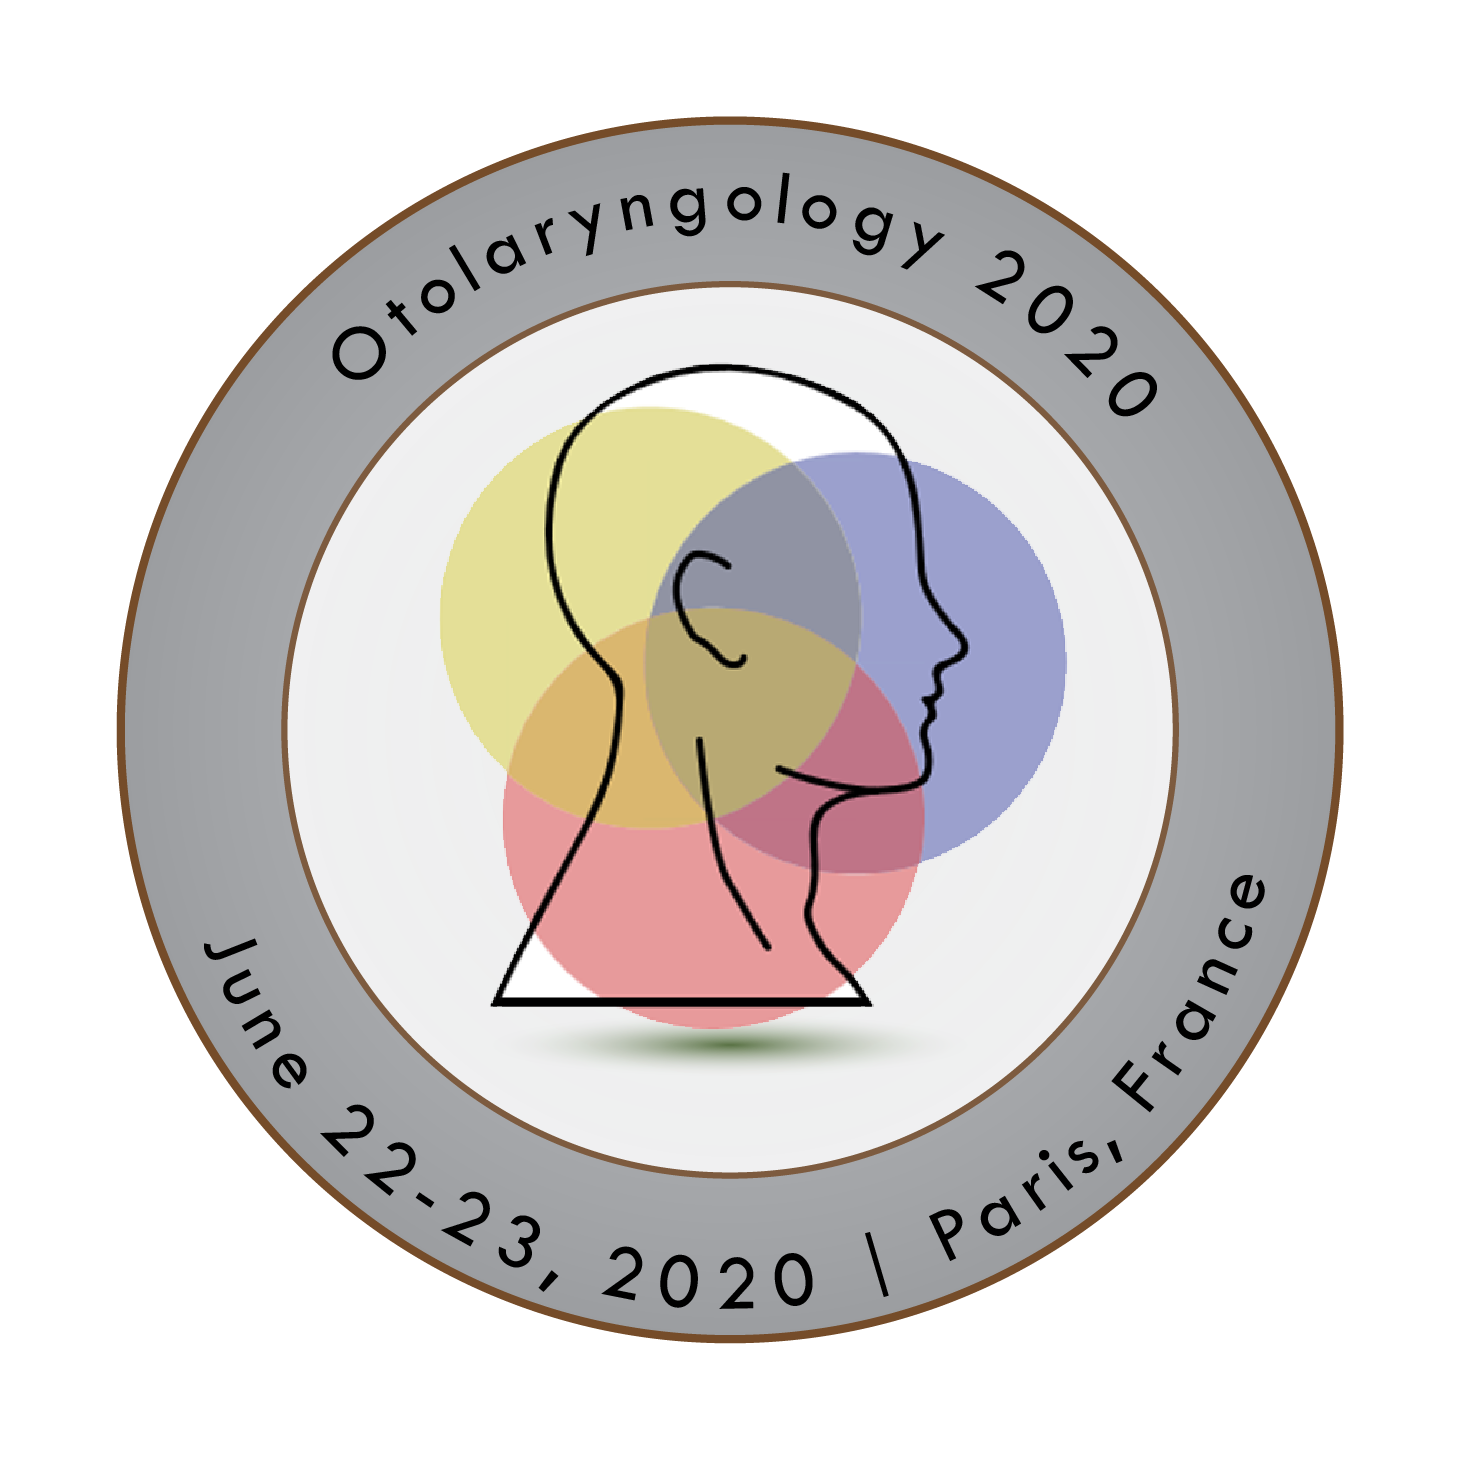 Otolaryngology Conferences 2020